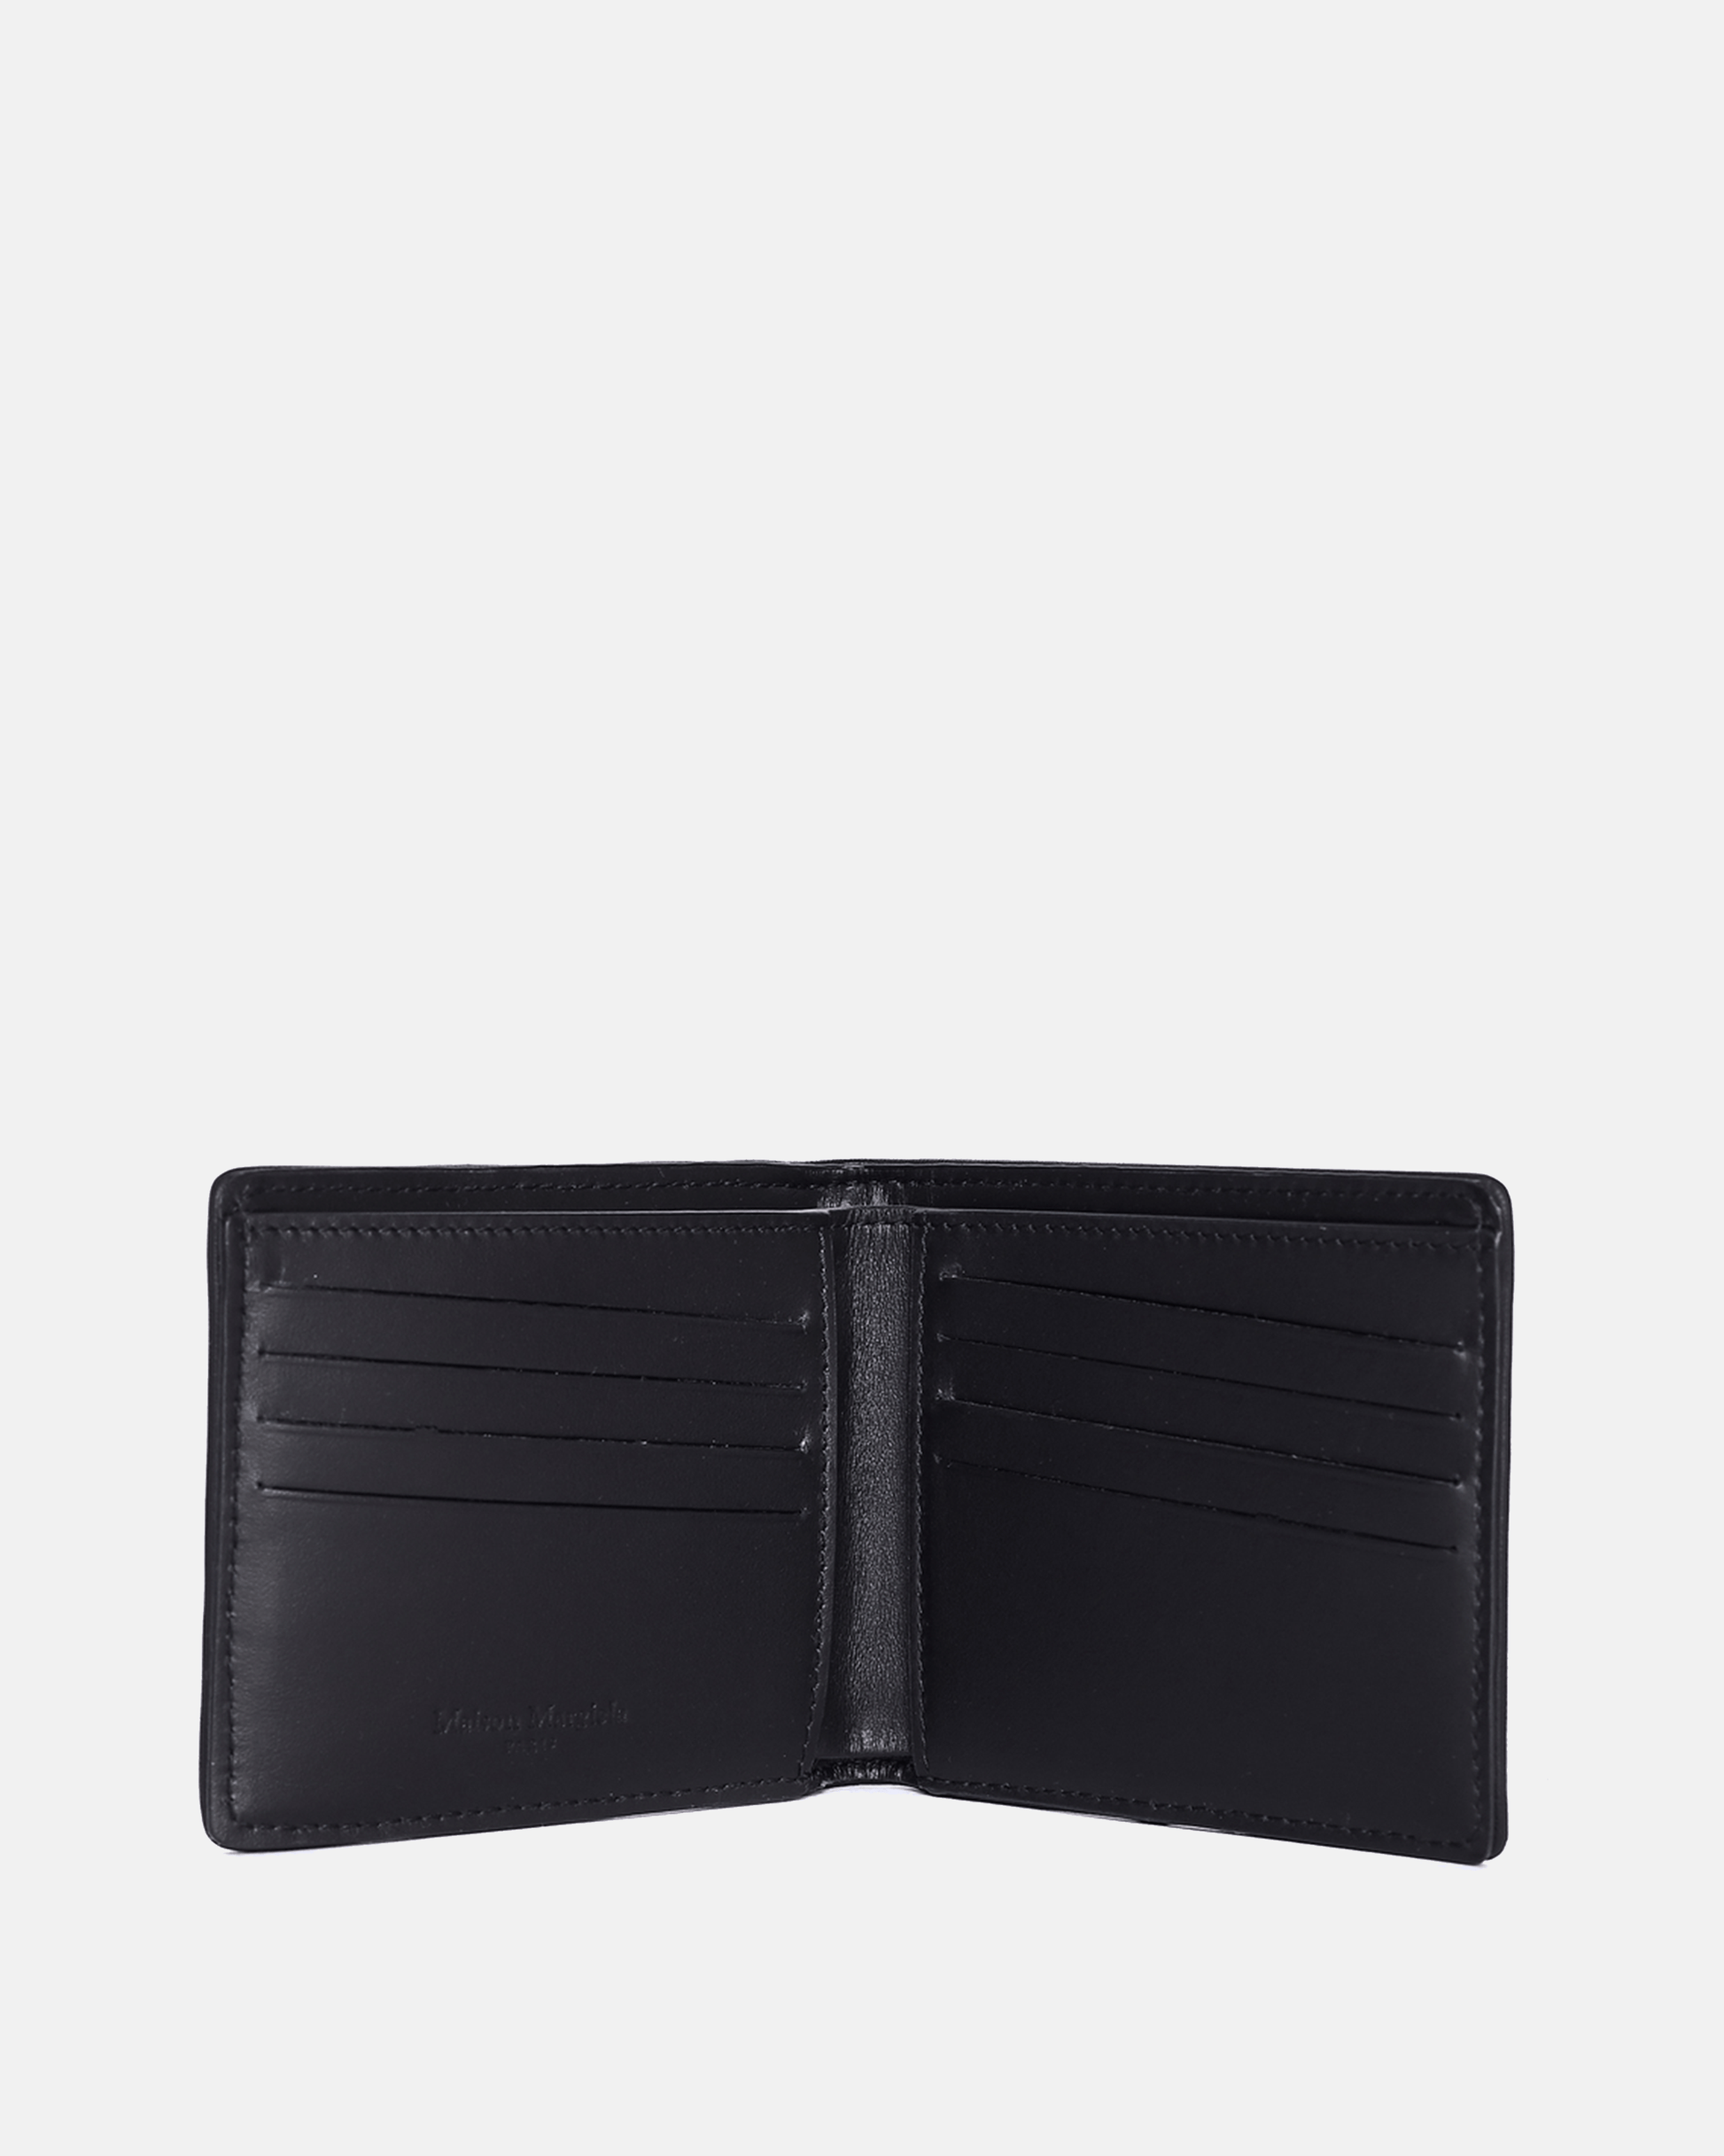 Maison Margiela Leather Goods Leather Glam Slam Wallet in Black